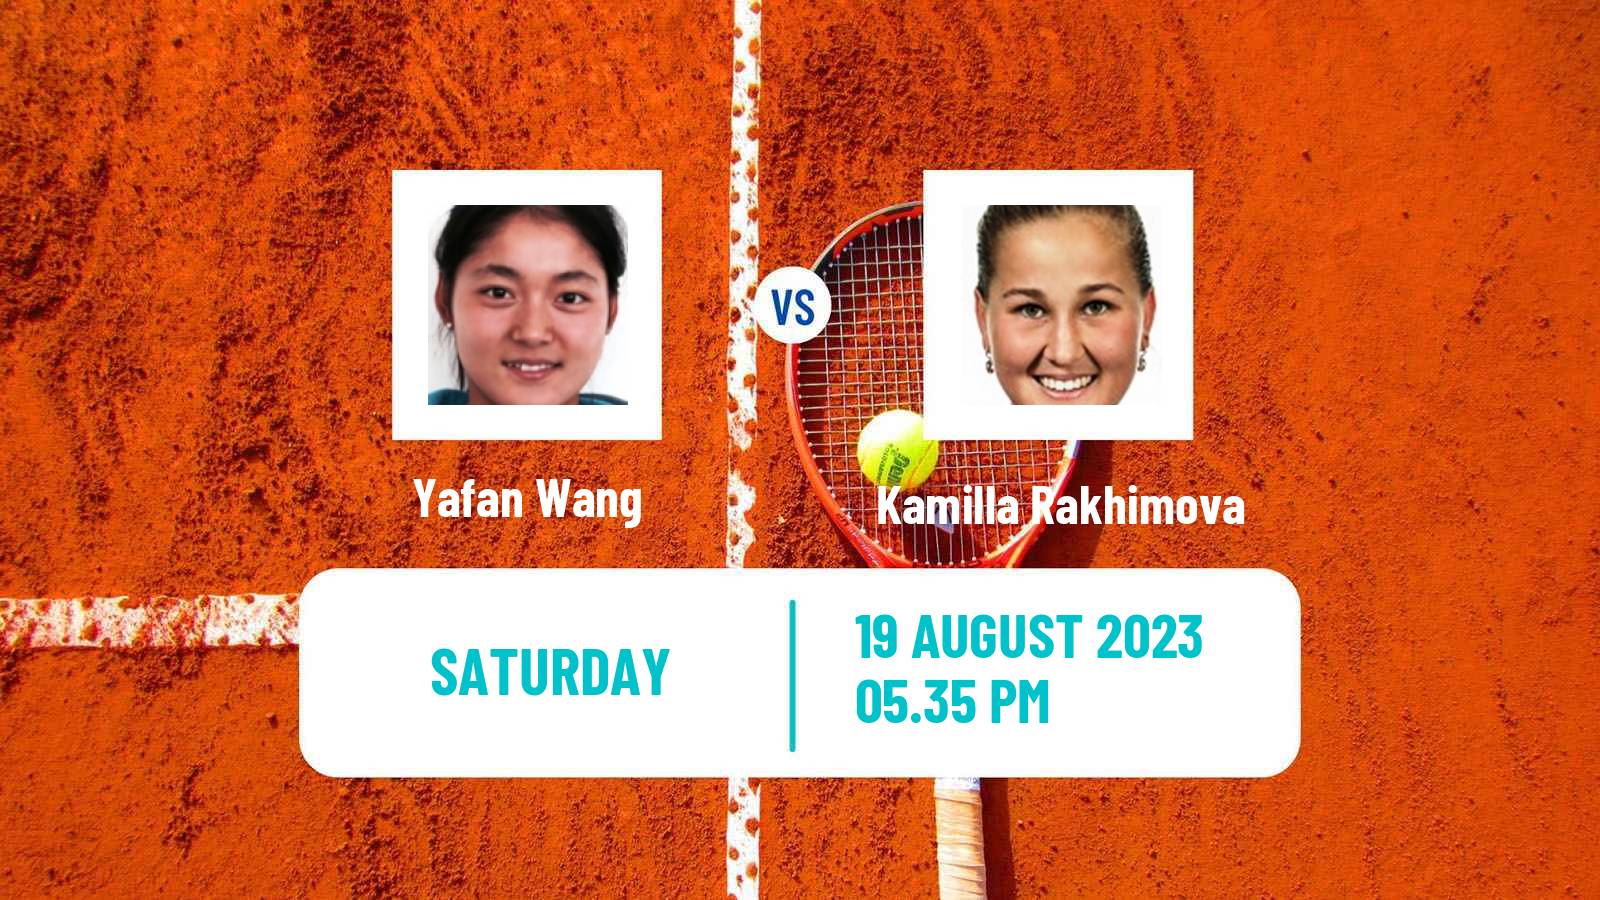 Tennis Stanford Challenger Women Yafan Wang - Kamilla Rakhimova